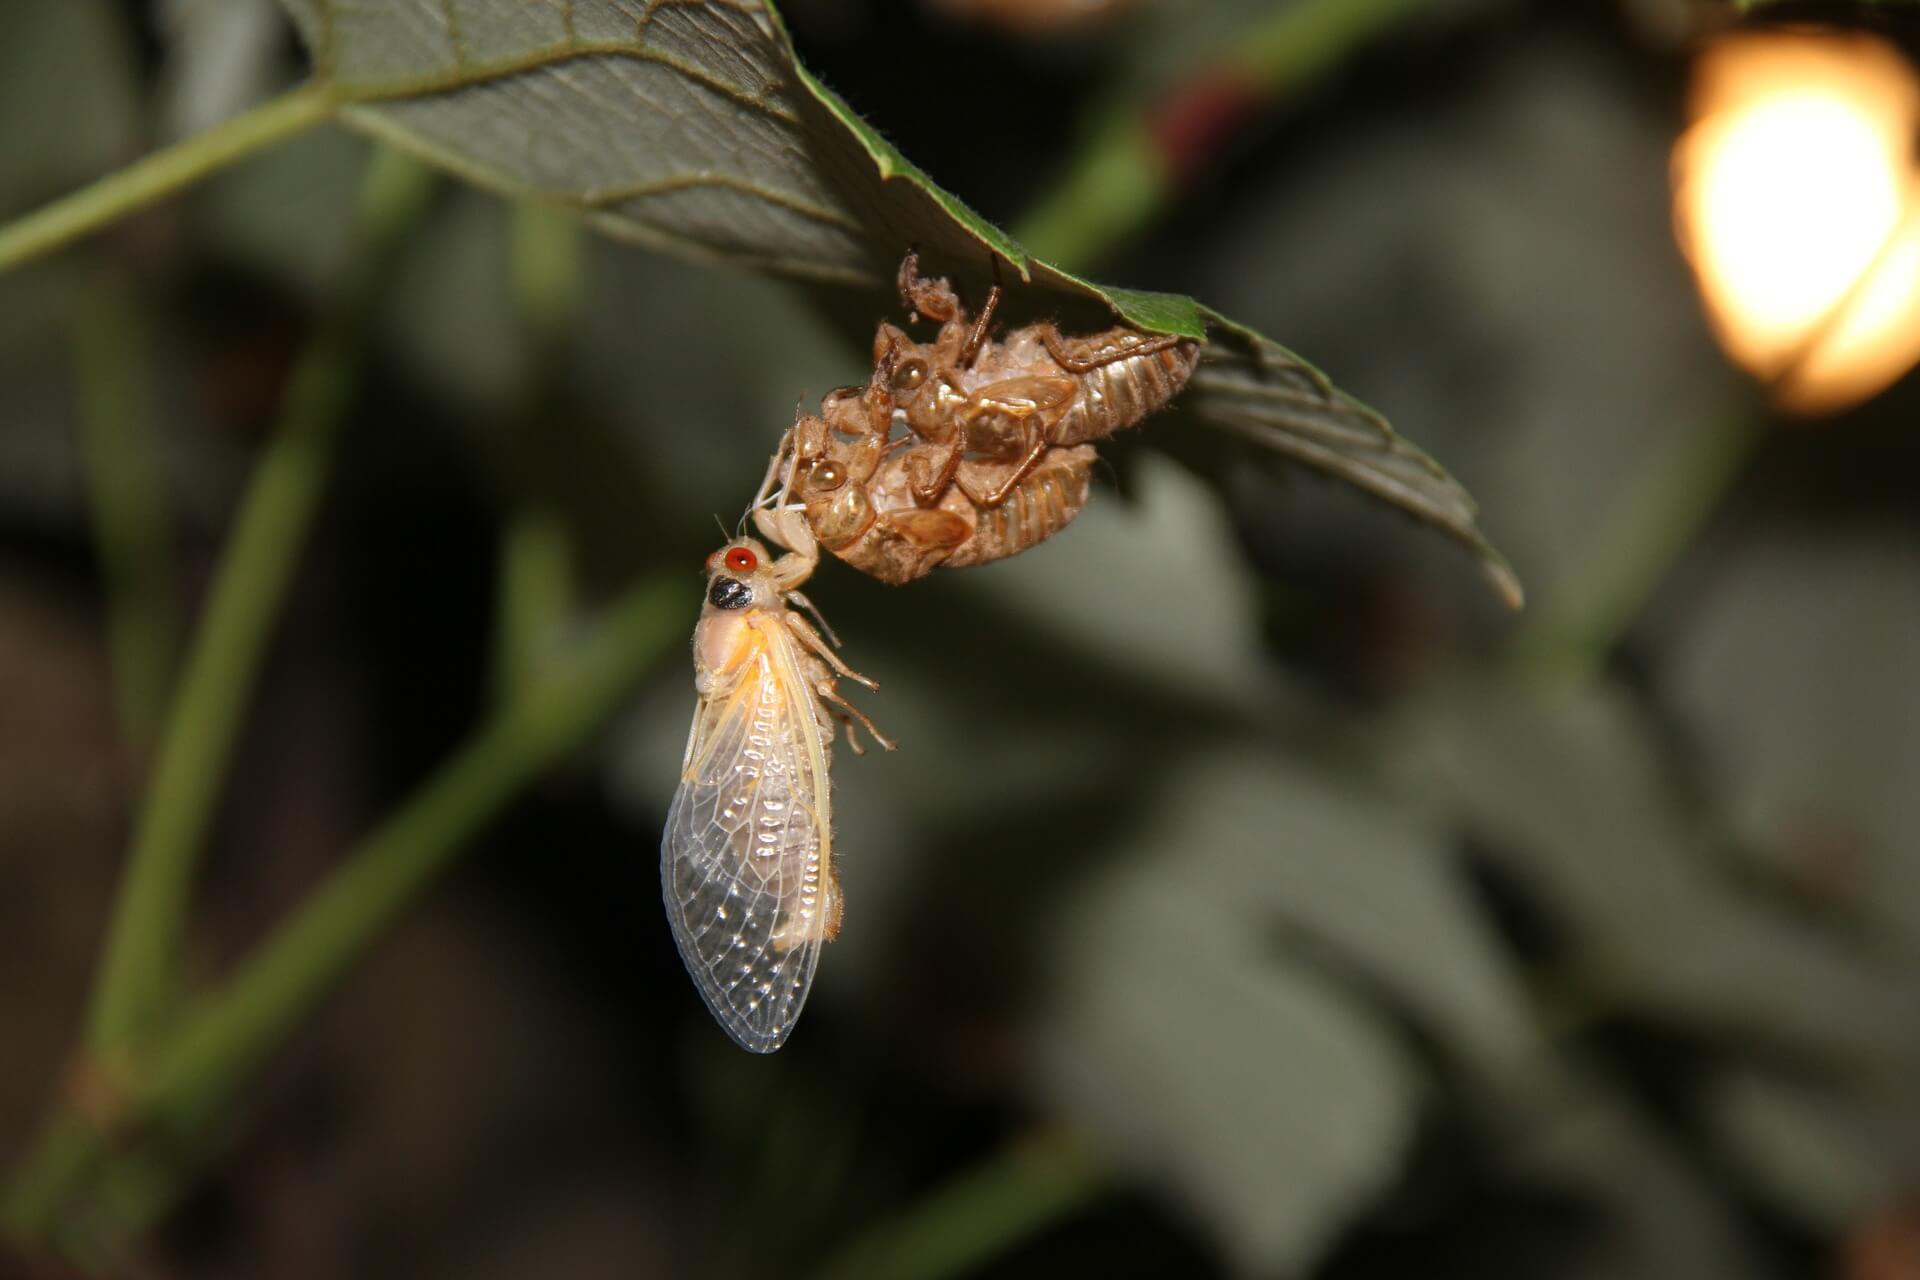 https://pixabay.com/en/cicada-insect-bugs-close-up-shell-362108/